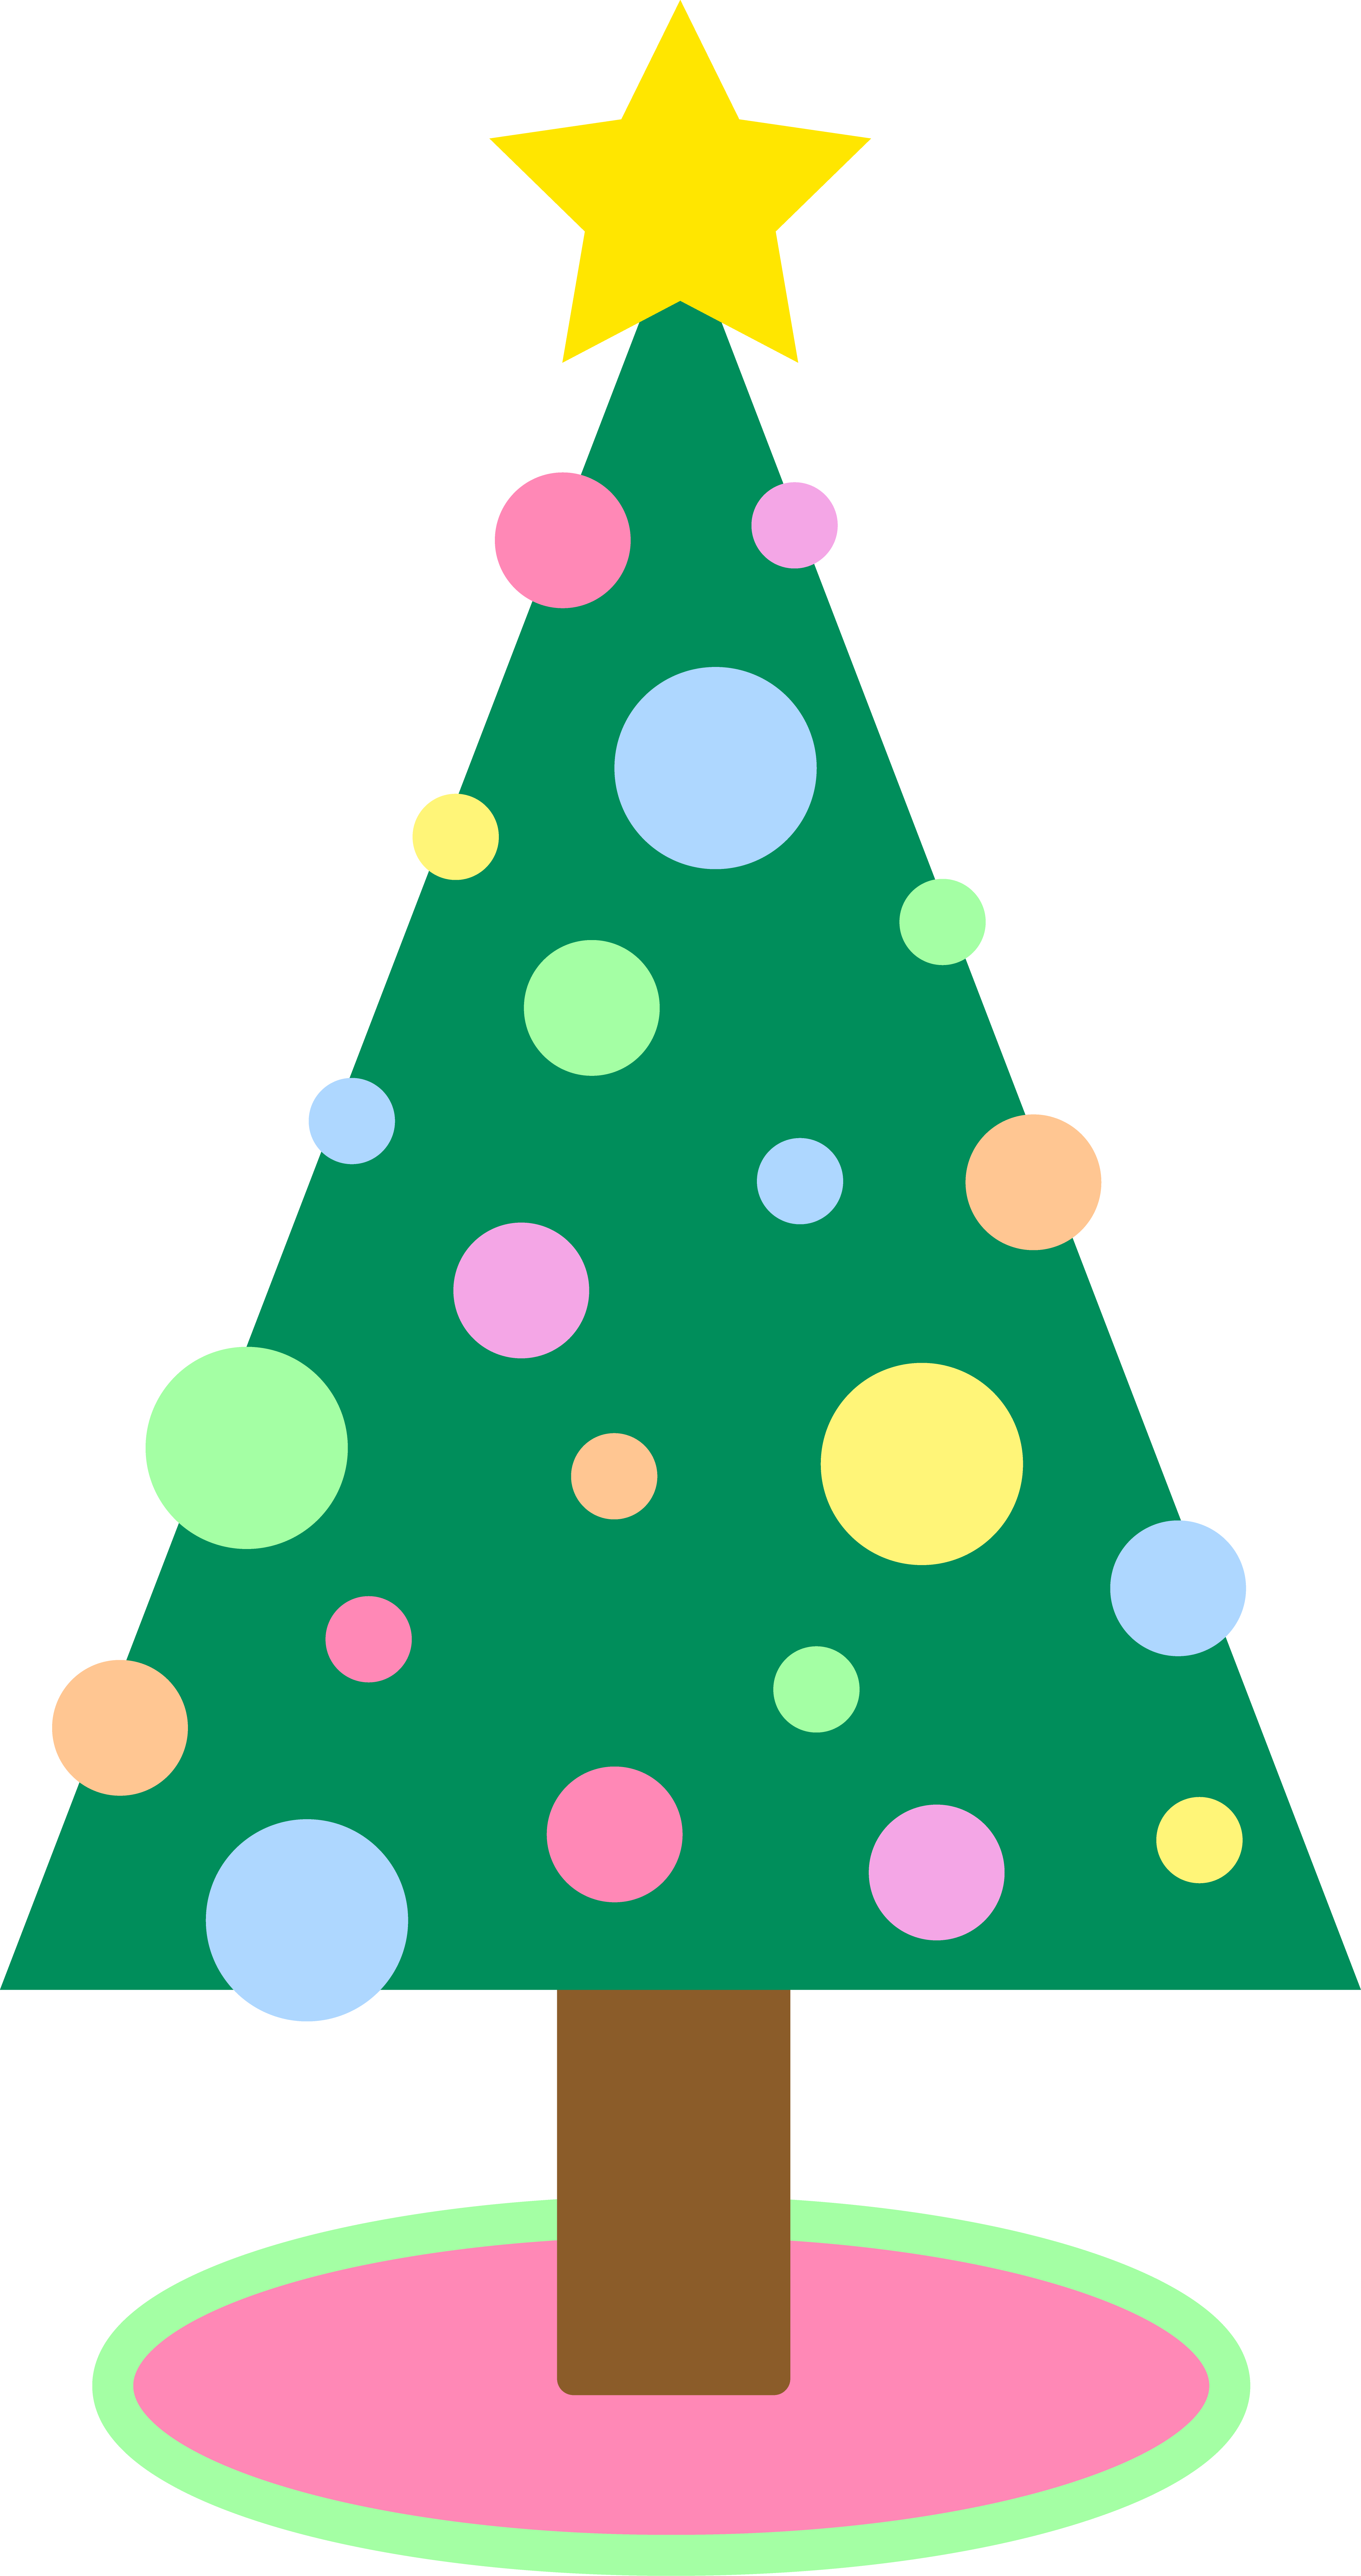 Designs and Christmas Tree Cartoon Clip Art | imagebasket.net